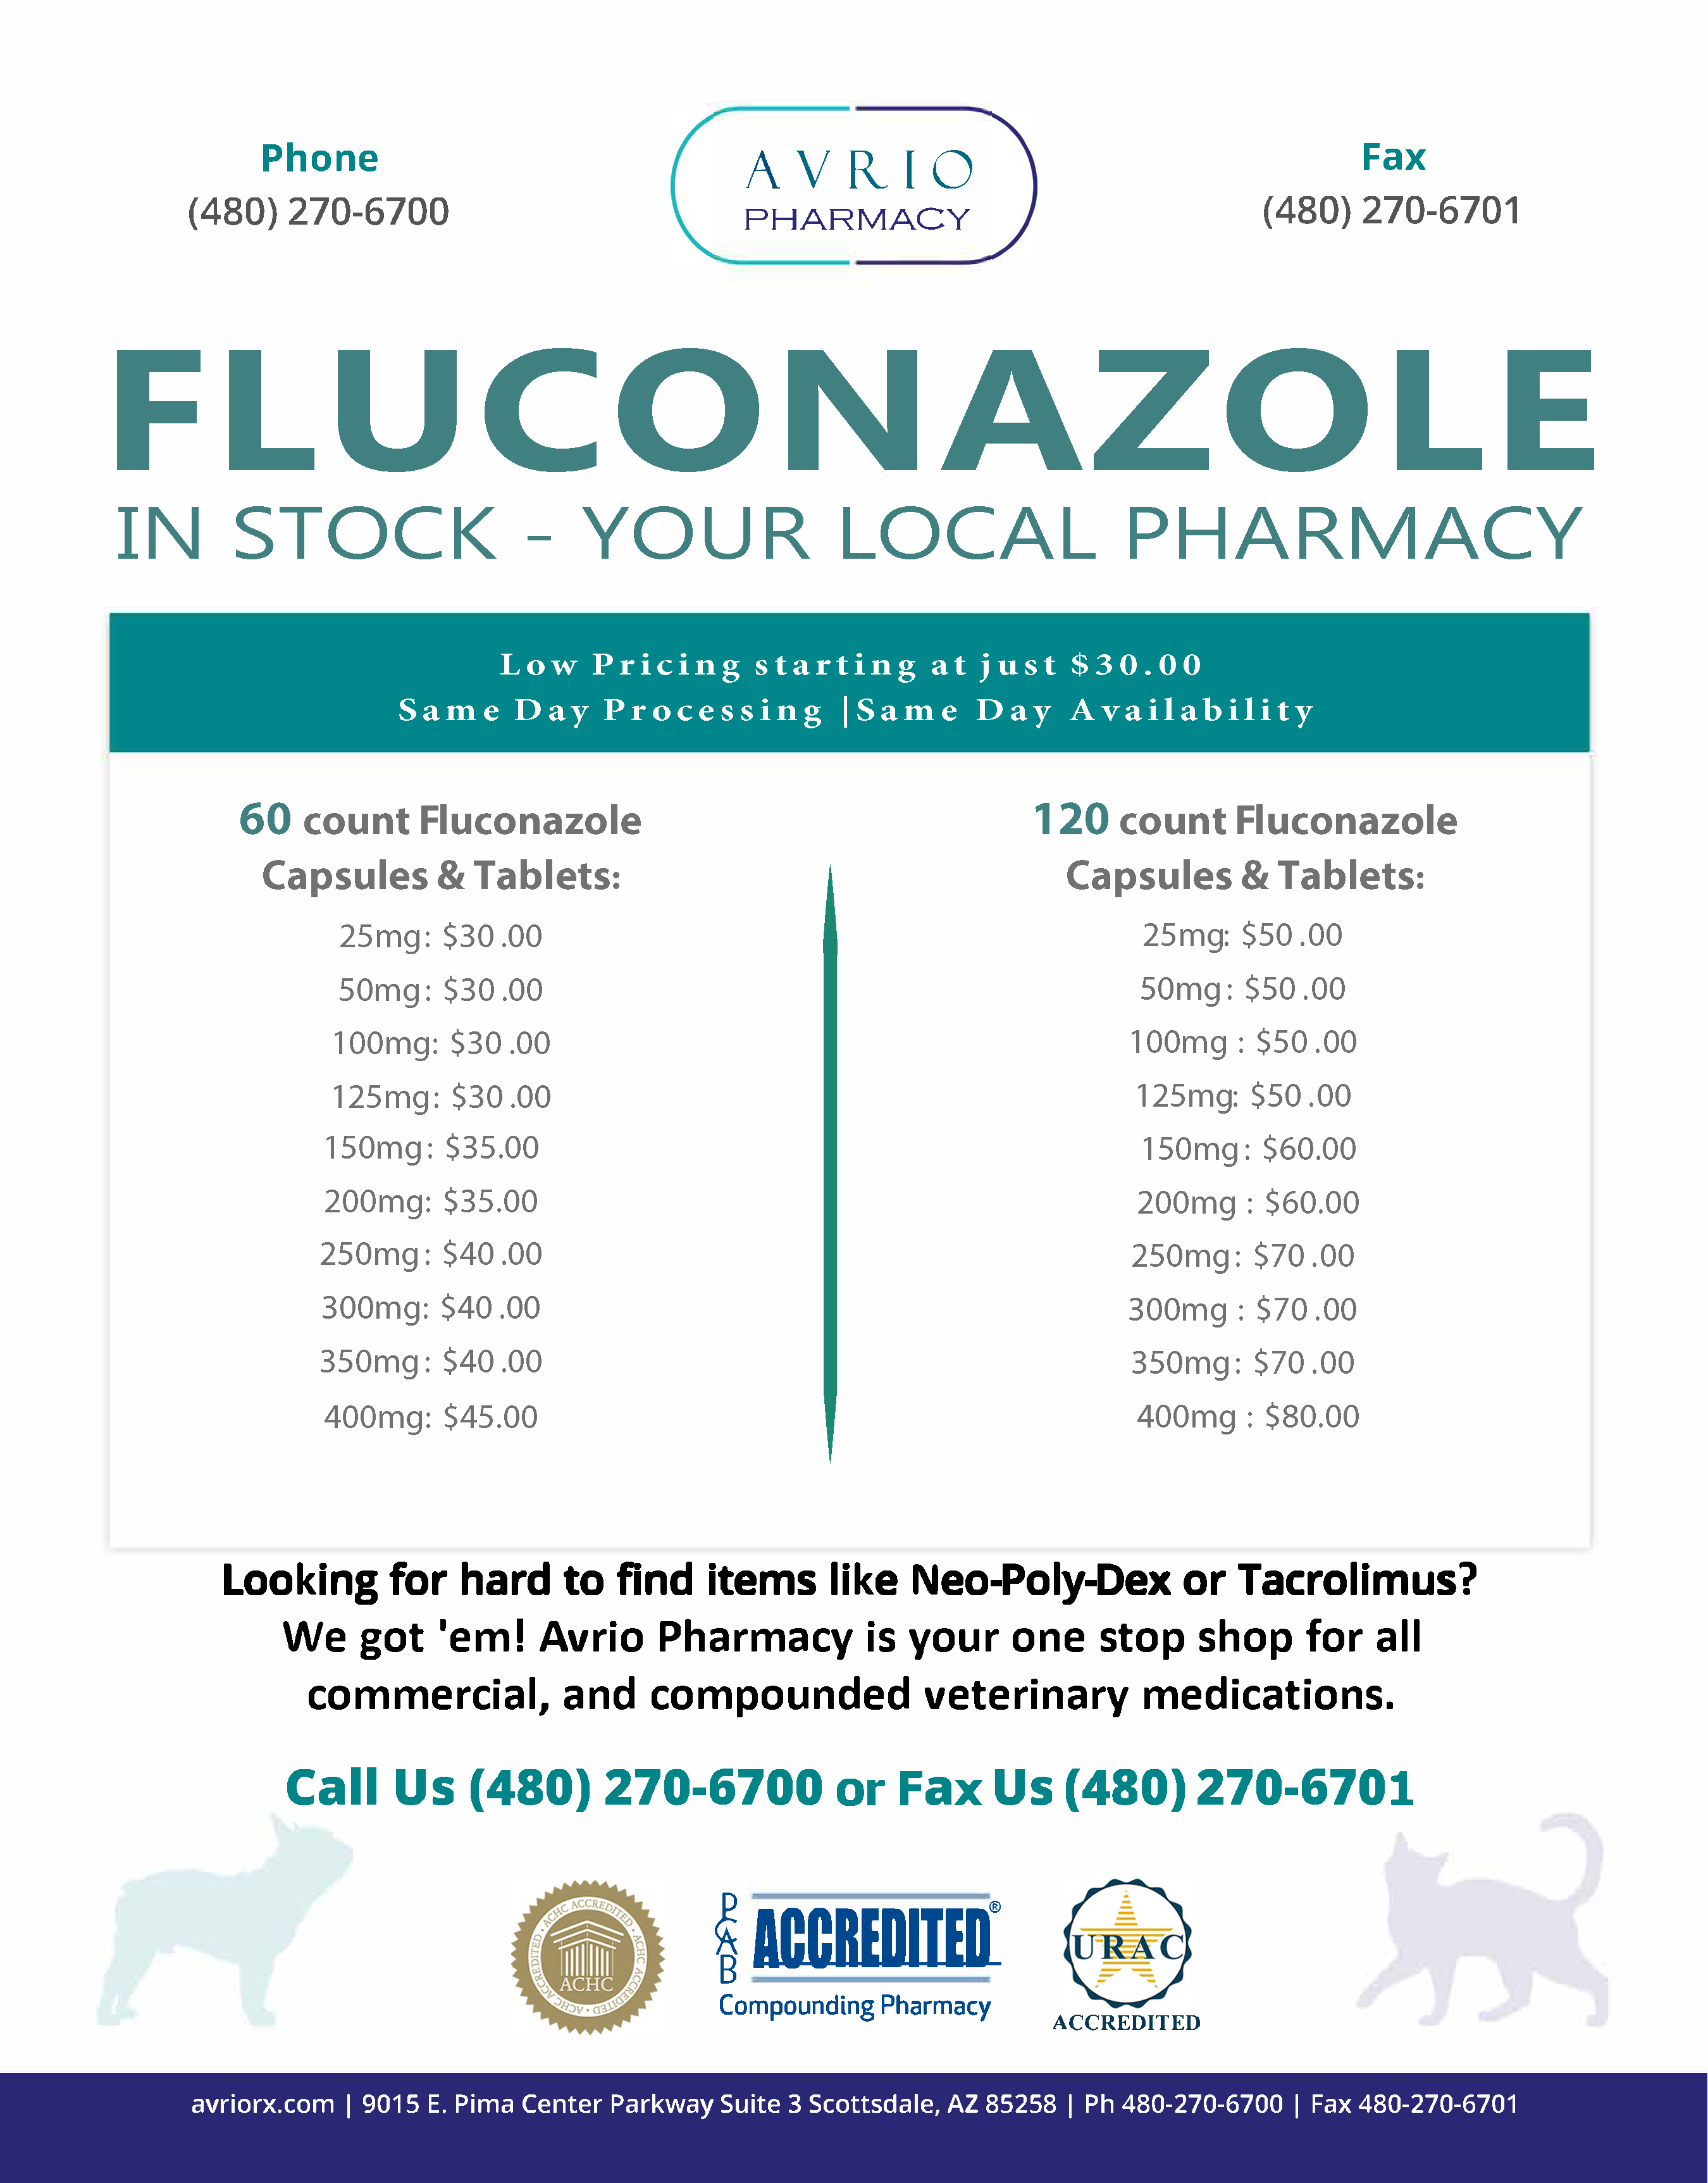 Get savings on Fluconazole at Avrio Pharmacy in Scottsdale Arizona